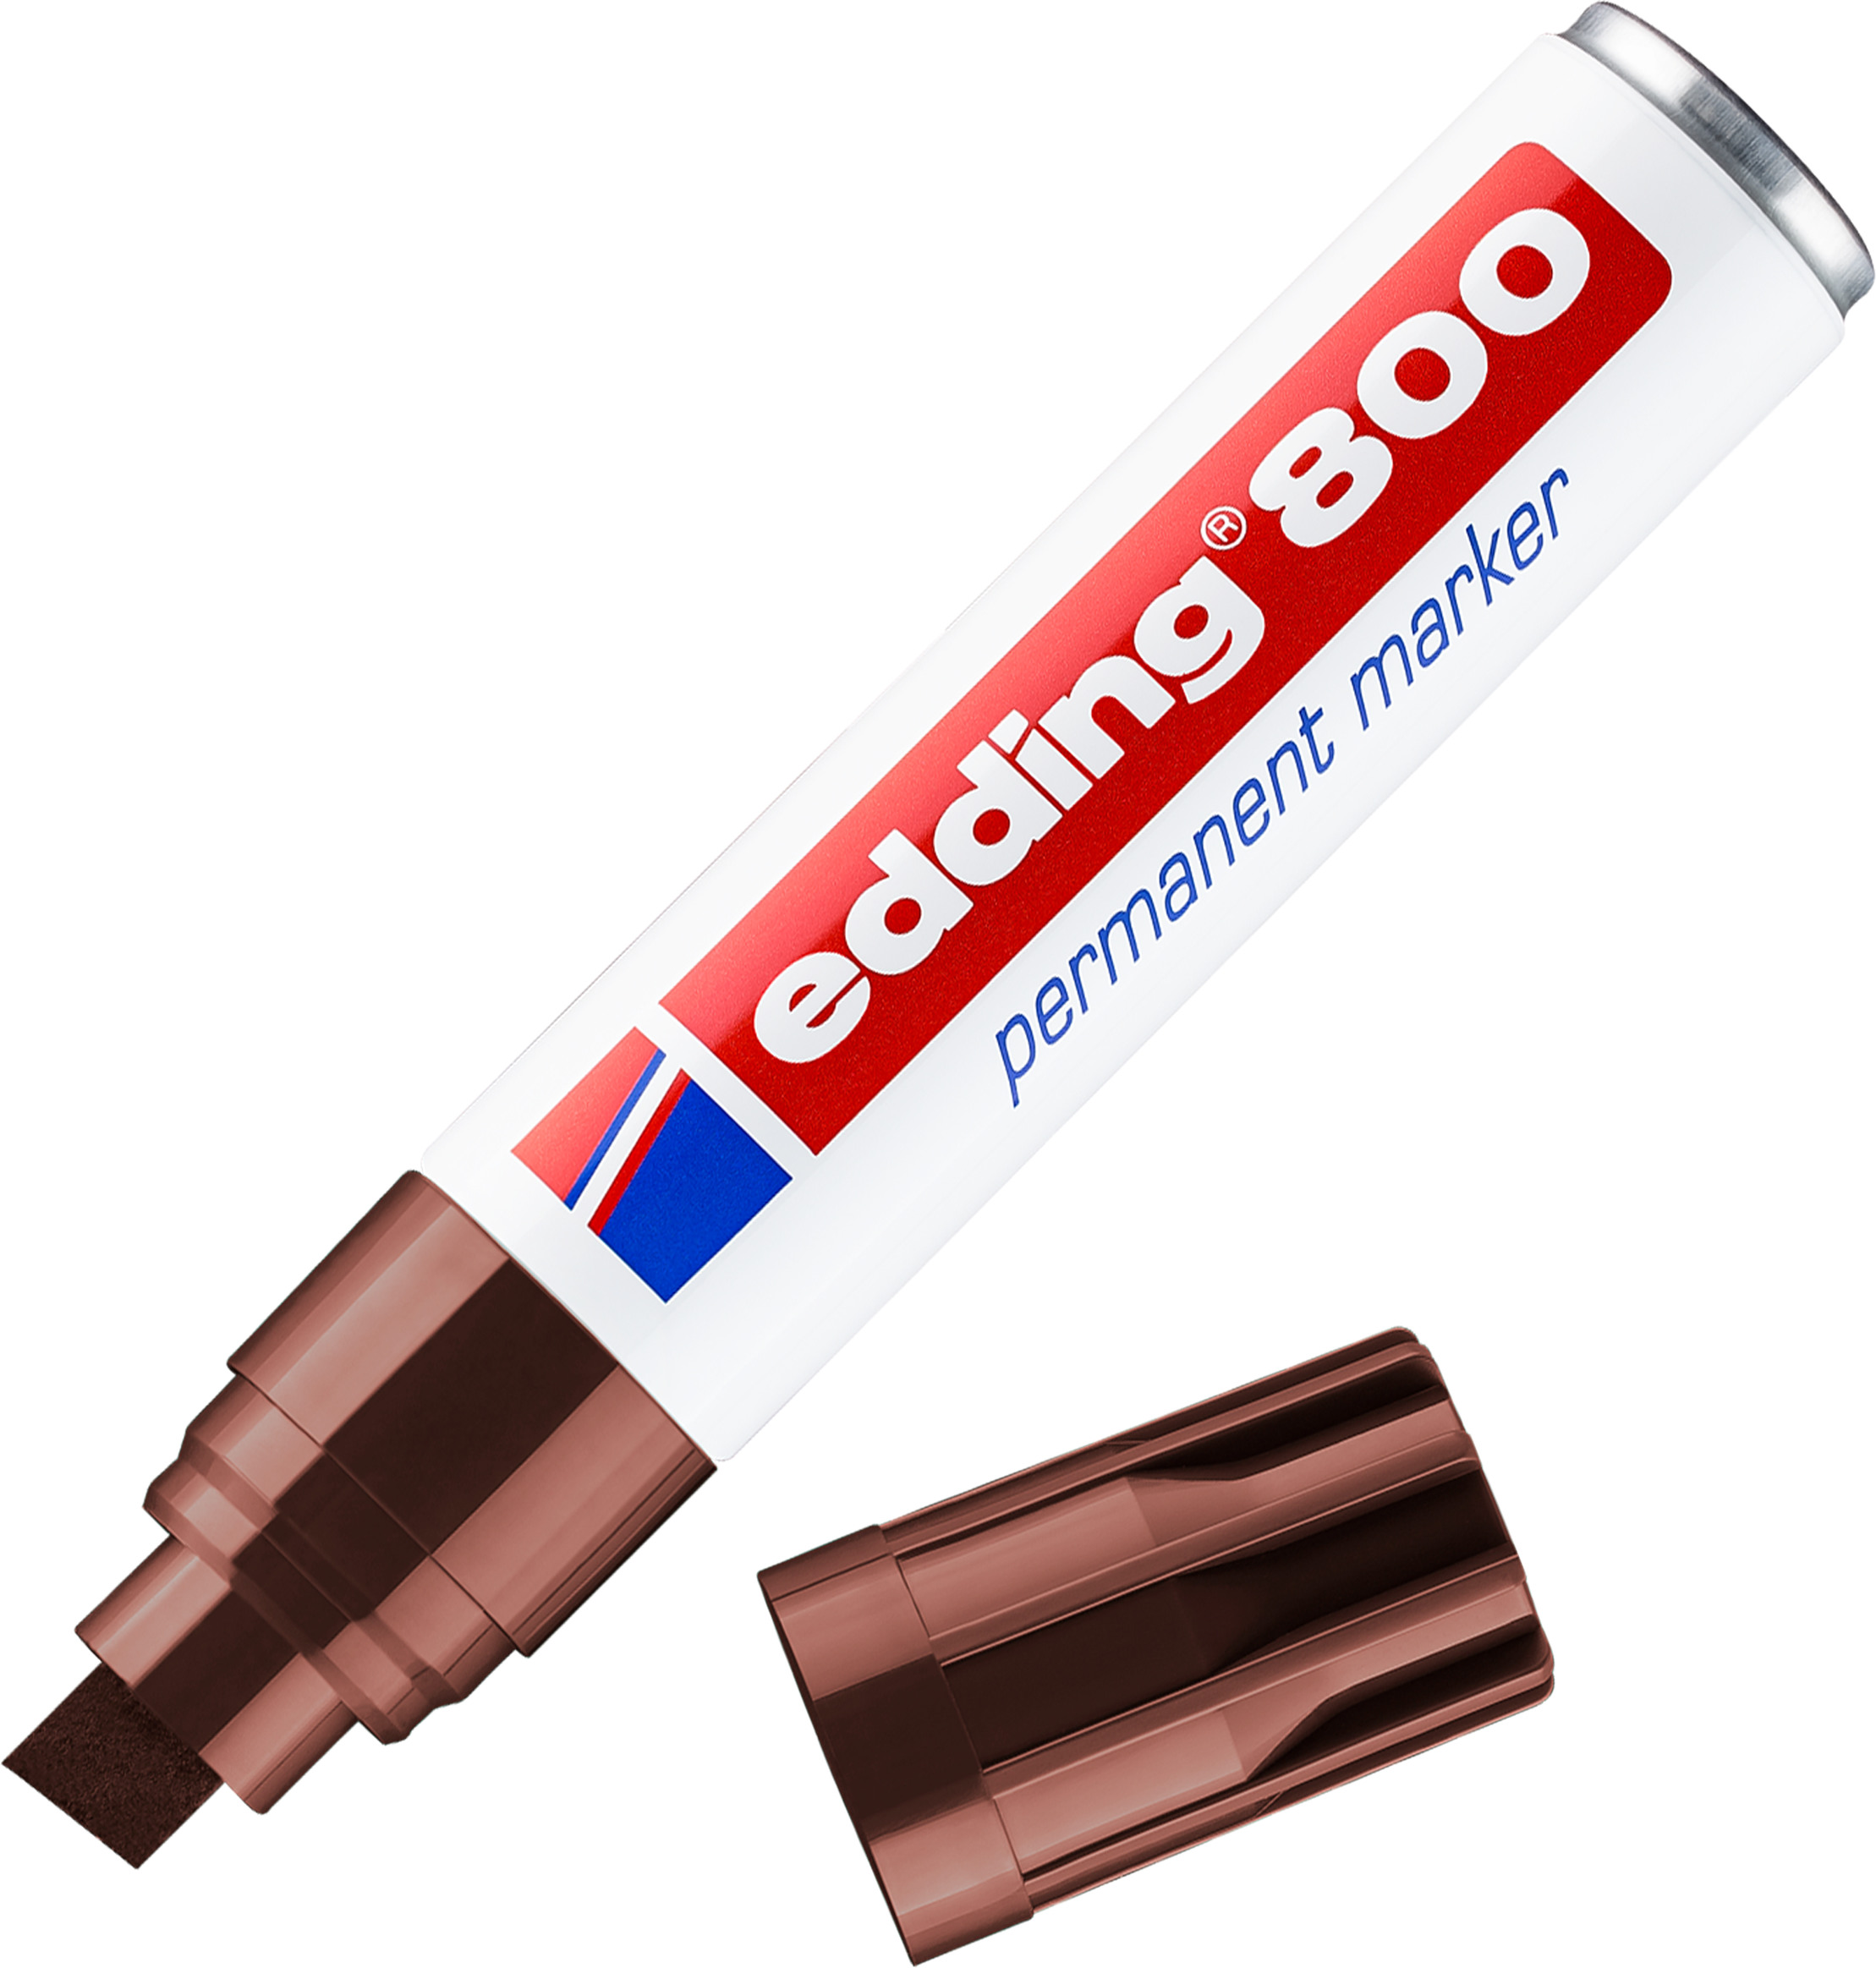 EDDING Permanent Marker 800 4-12mm 800-7 brun